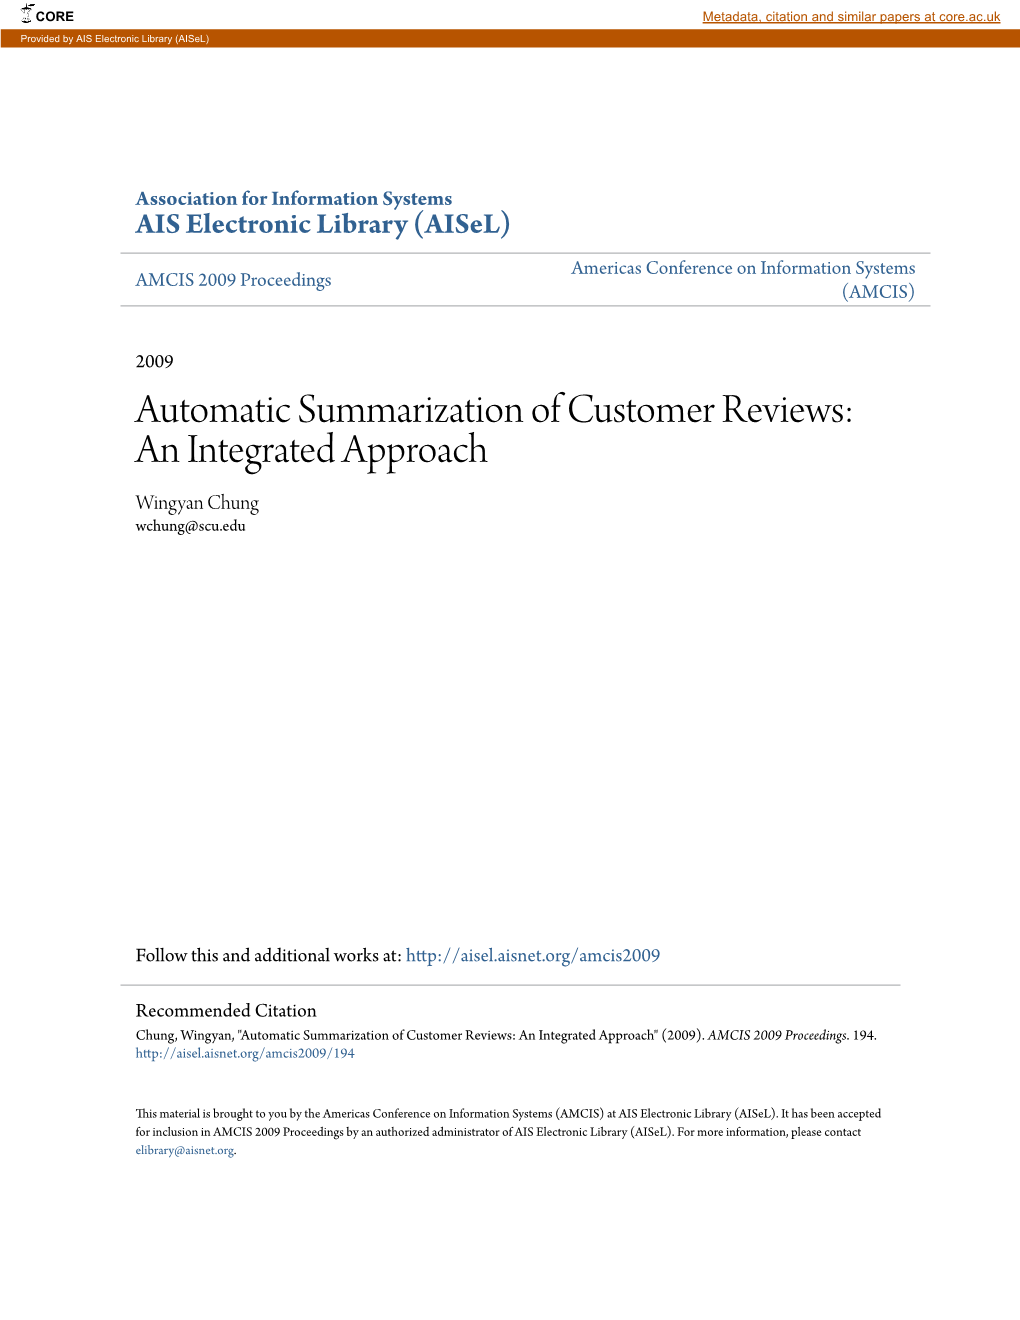 Automatic Summarization of Customer Reviews: an Integrated Approach Wingyan Chung Wchung@Scu.Edu